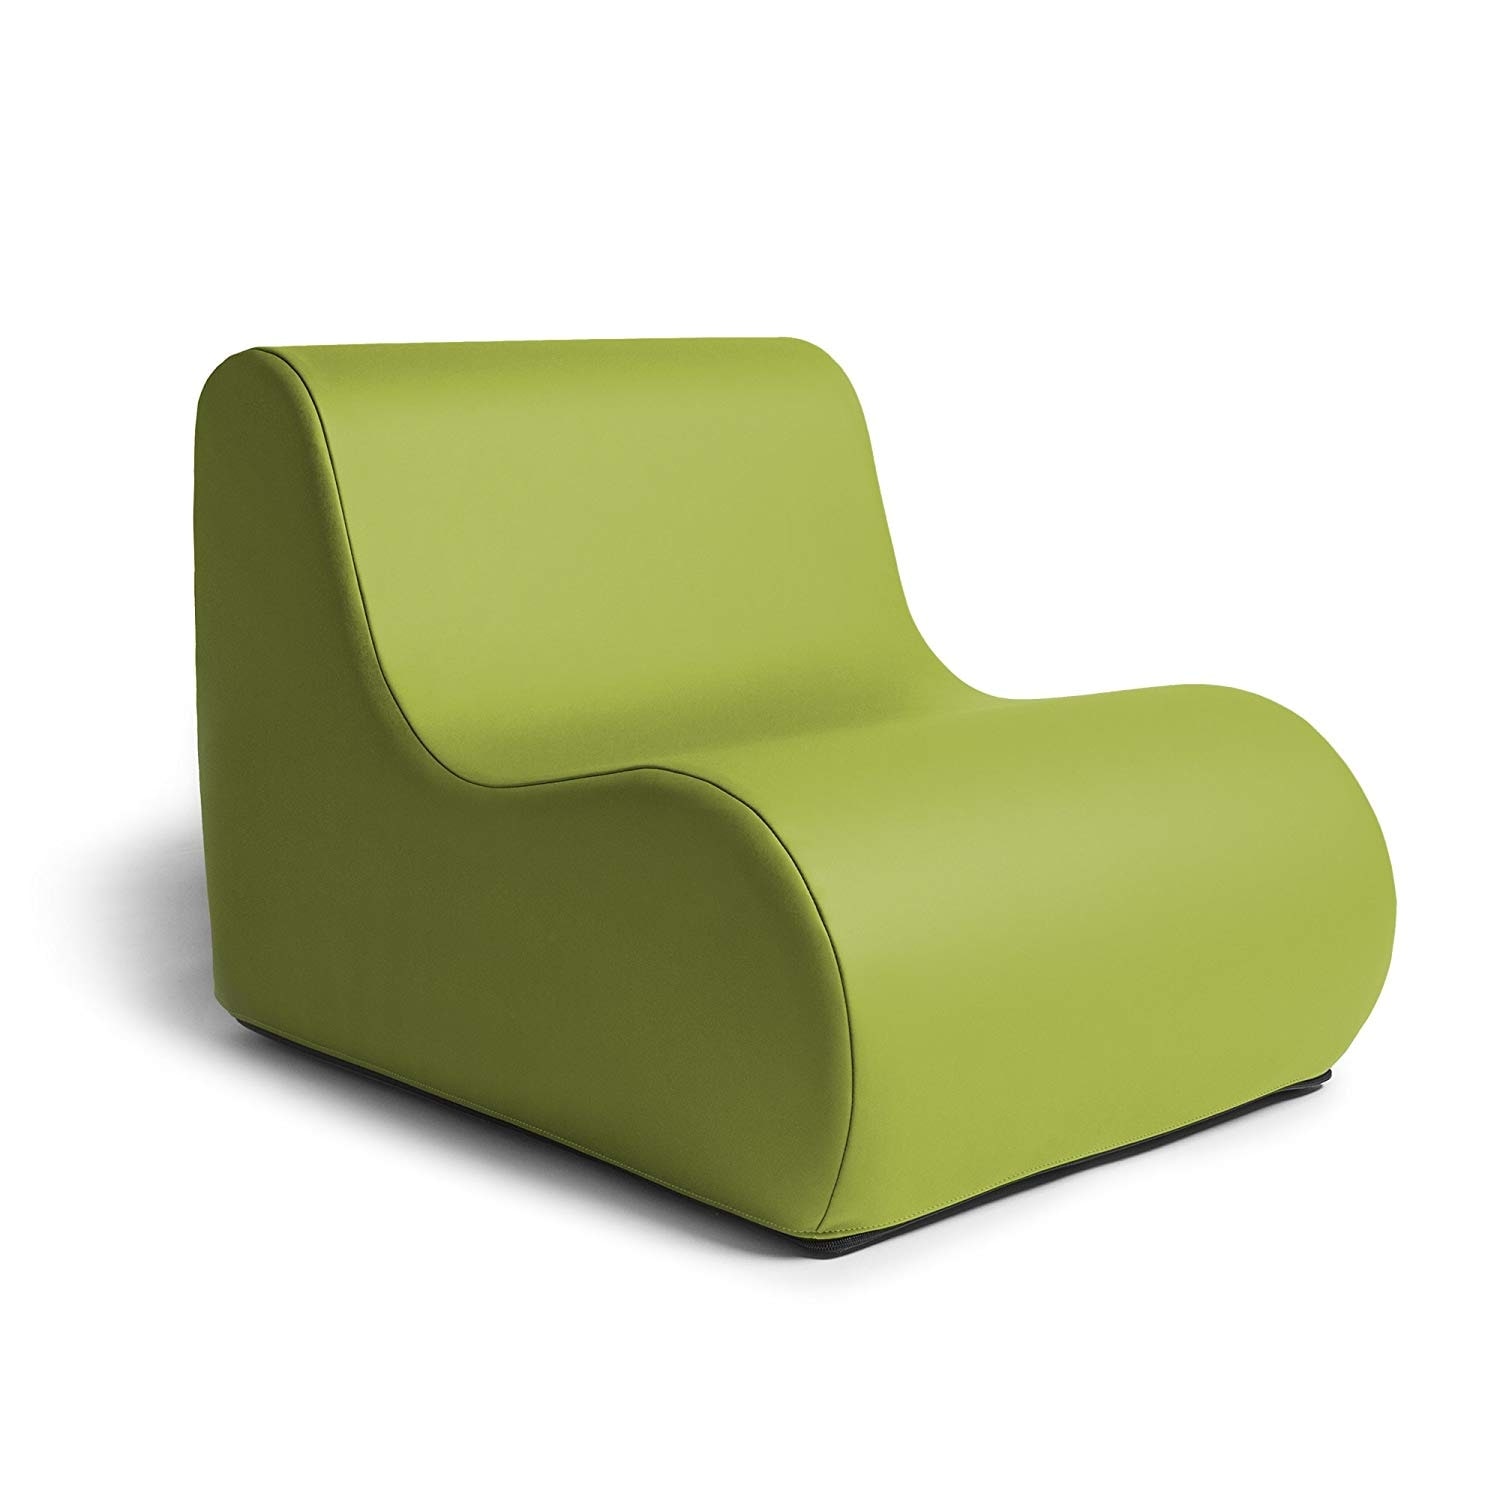 Jaxx Midtown Jr Classroom Soft Foam Chair - Premium Vinyl Cover, Green